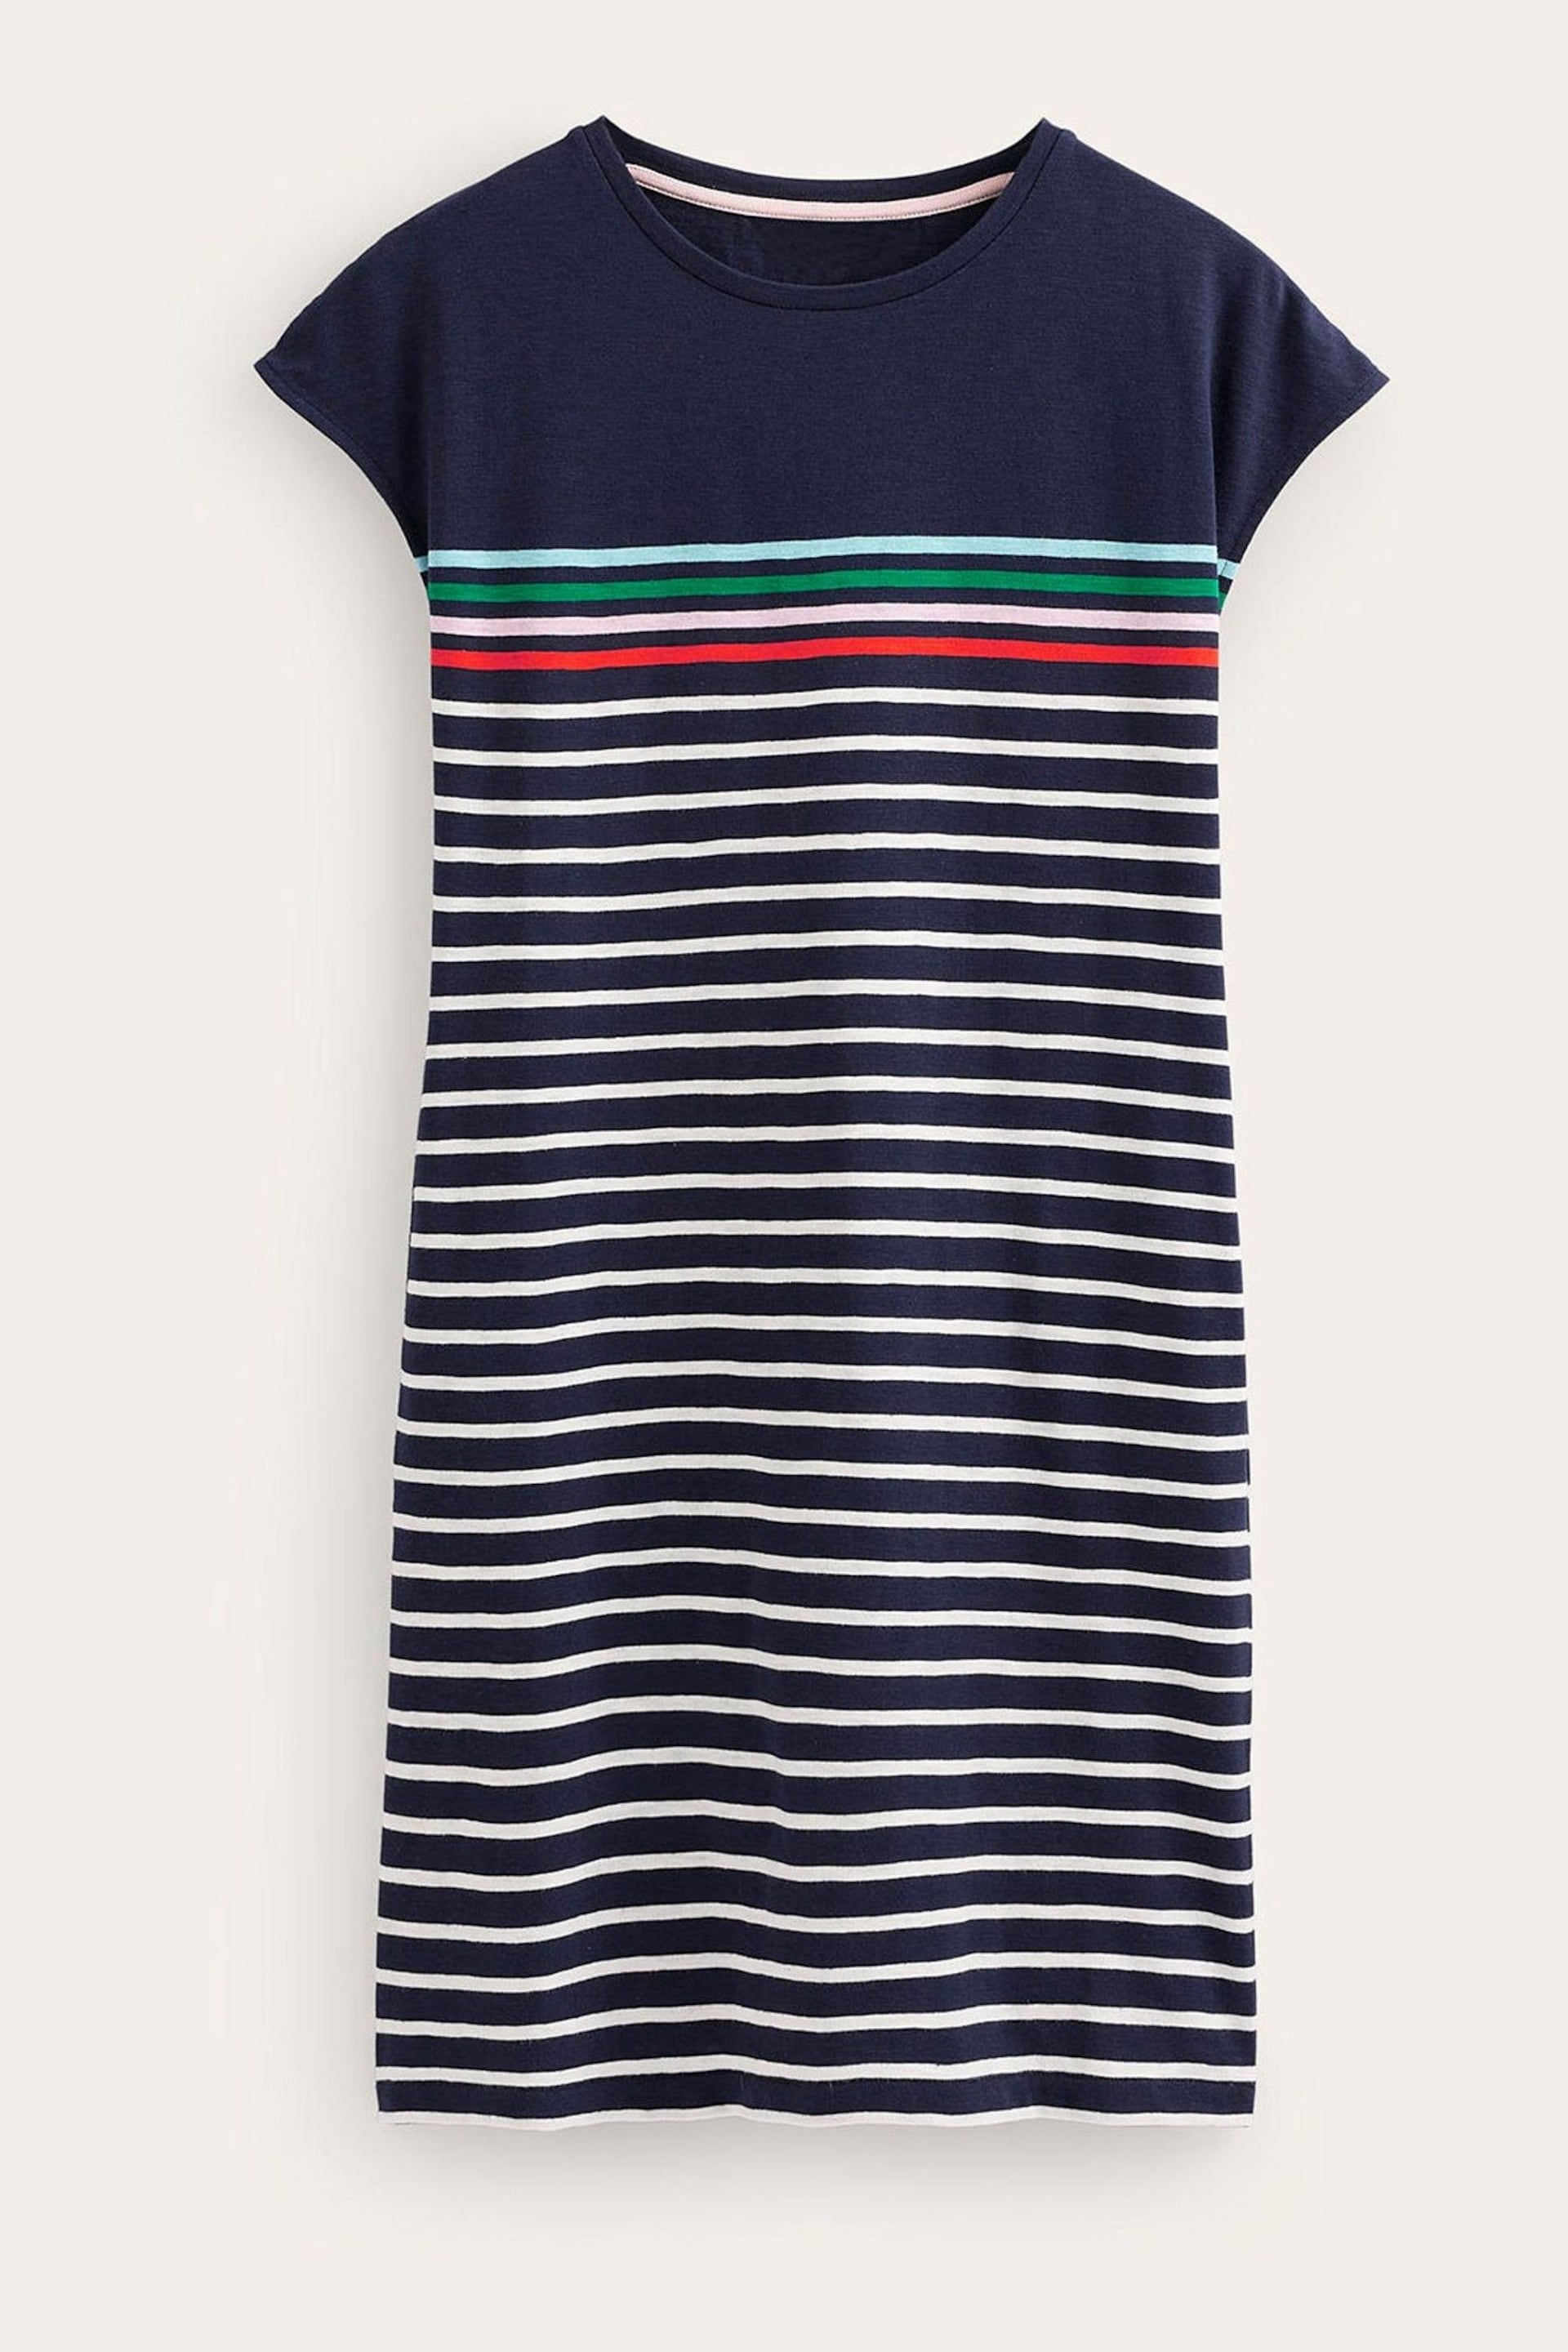 Boden Blue Stripe Leah Jersey T-Shirt Dress - Image 5 of 5